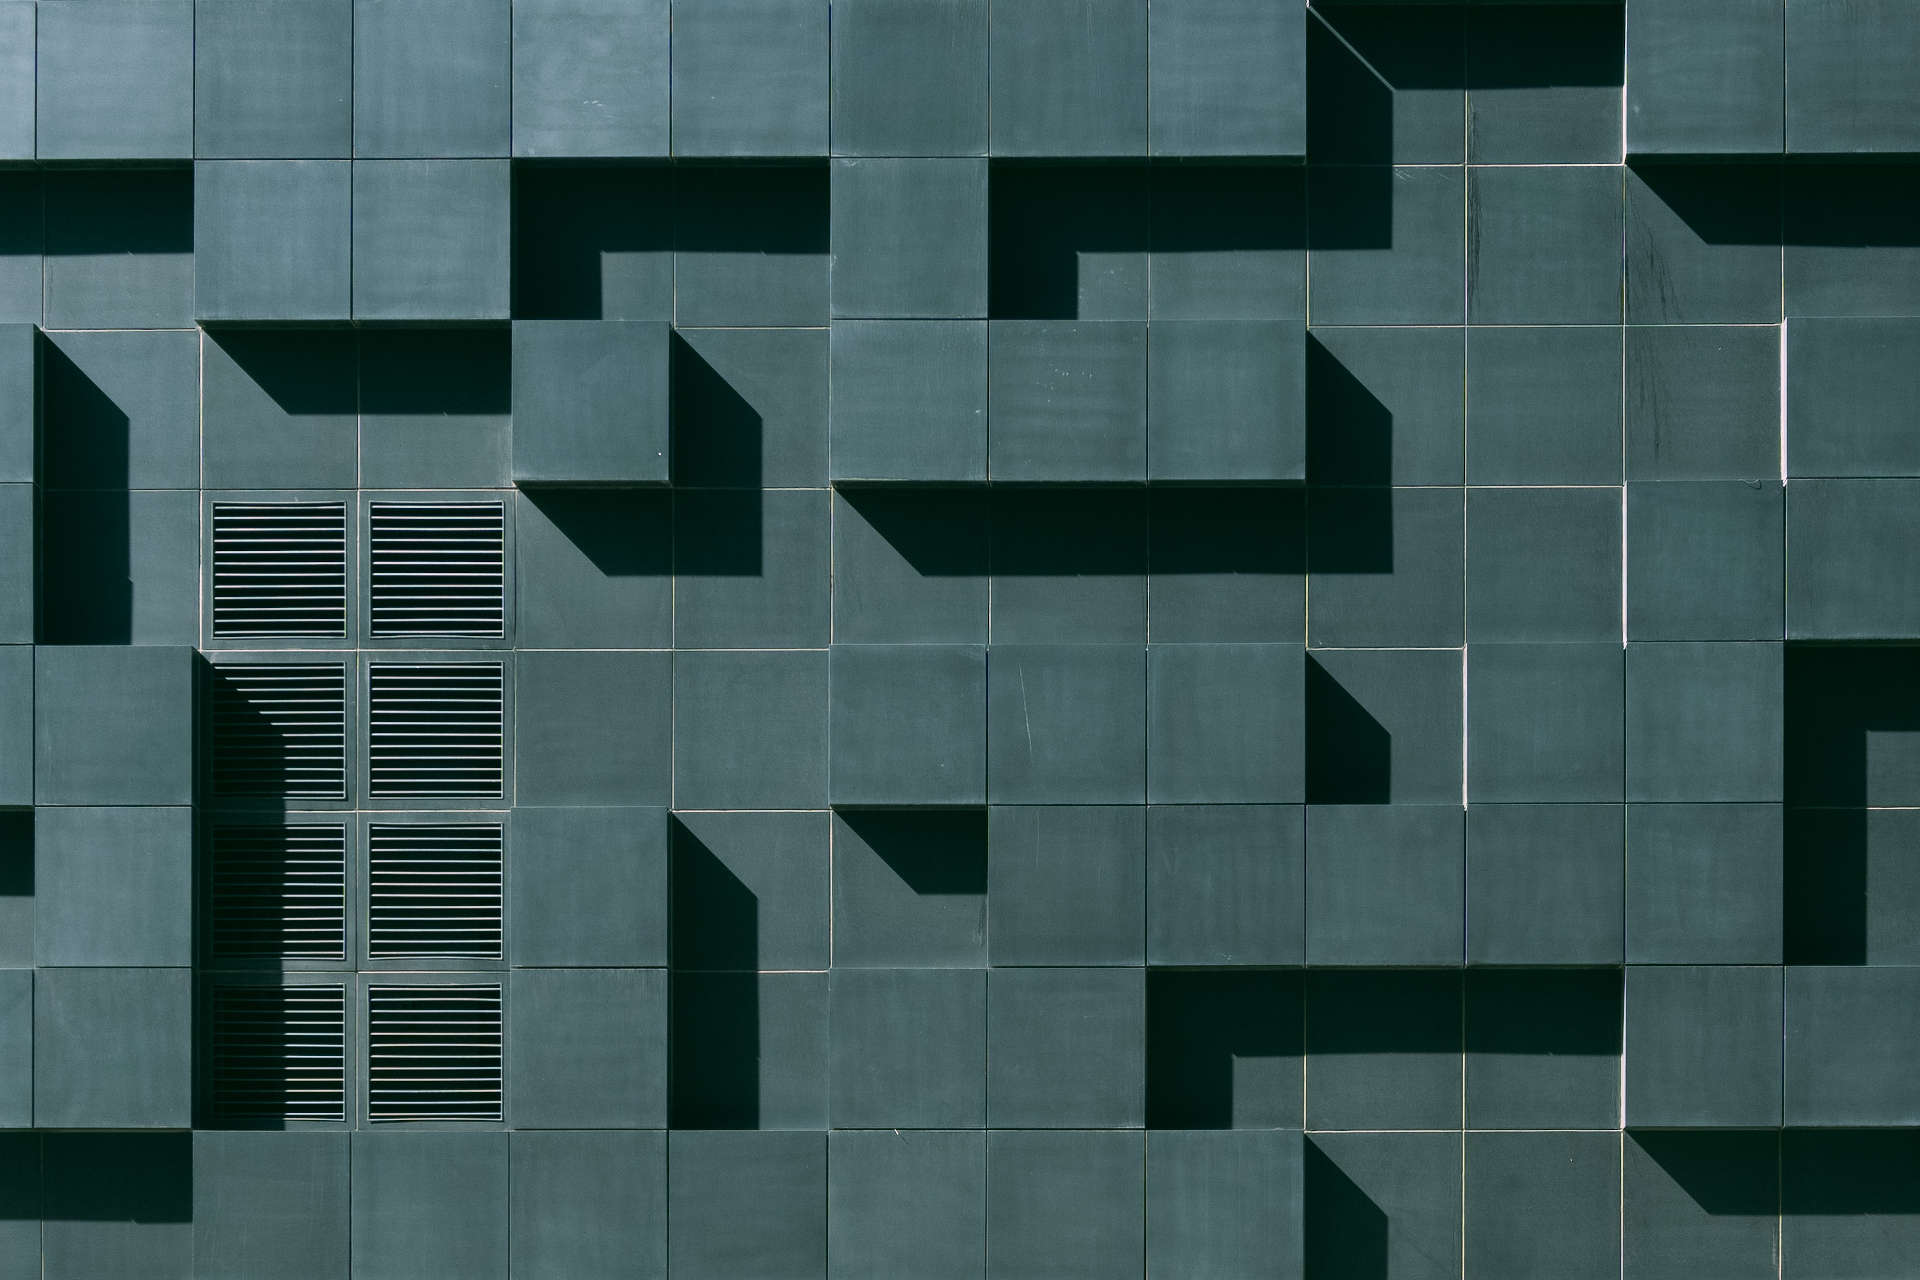 grey concrete building exterior with geometric design